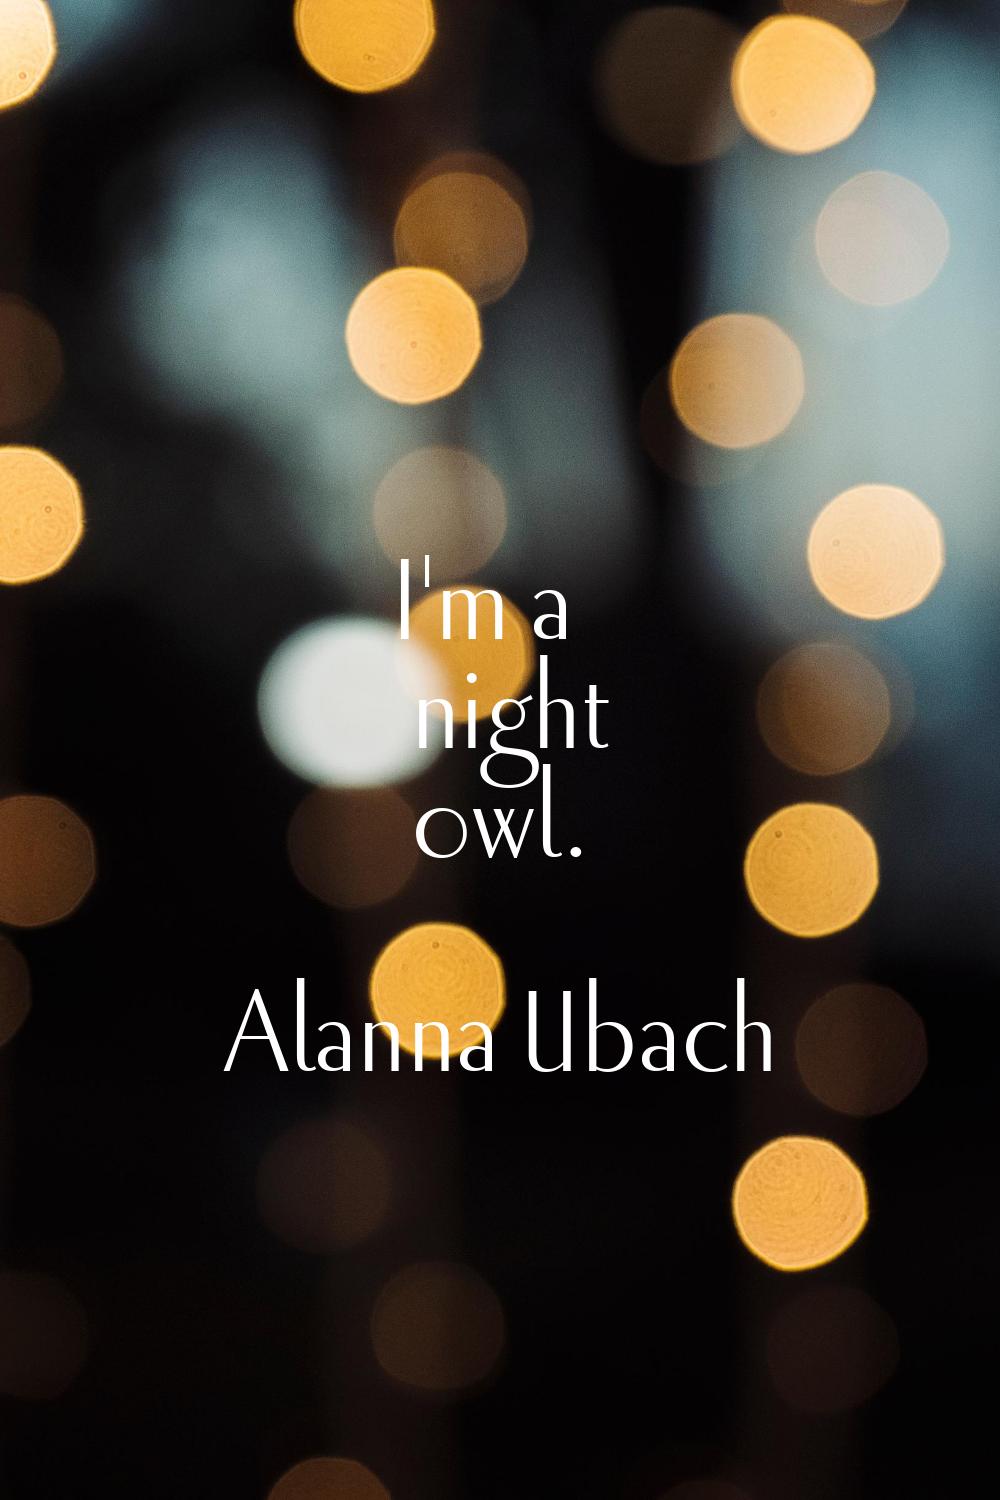 I'm a night owl.